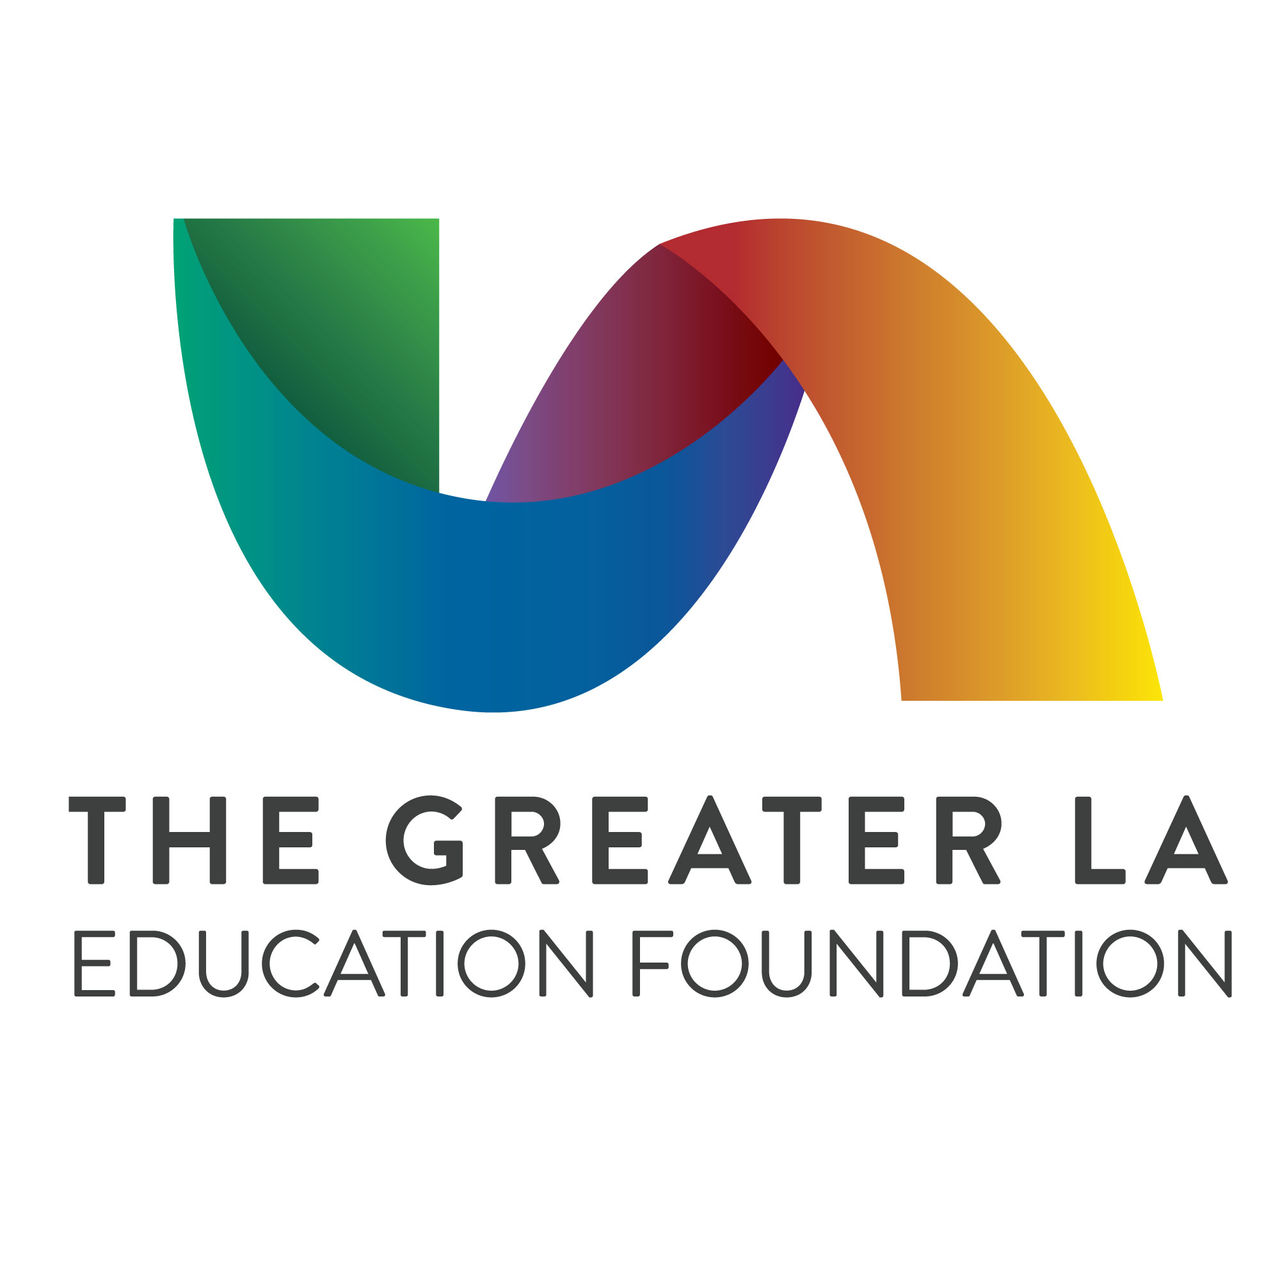 The Greater LA Education Foundation logo